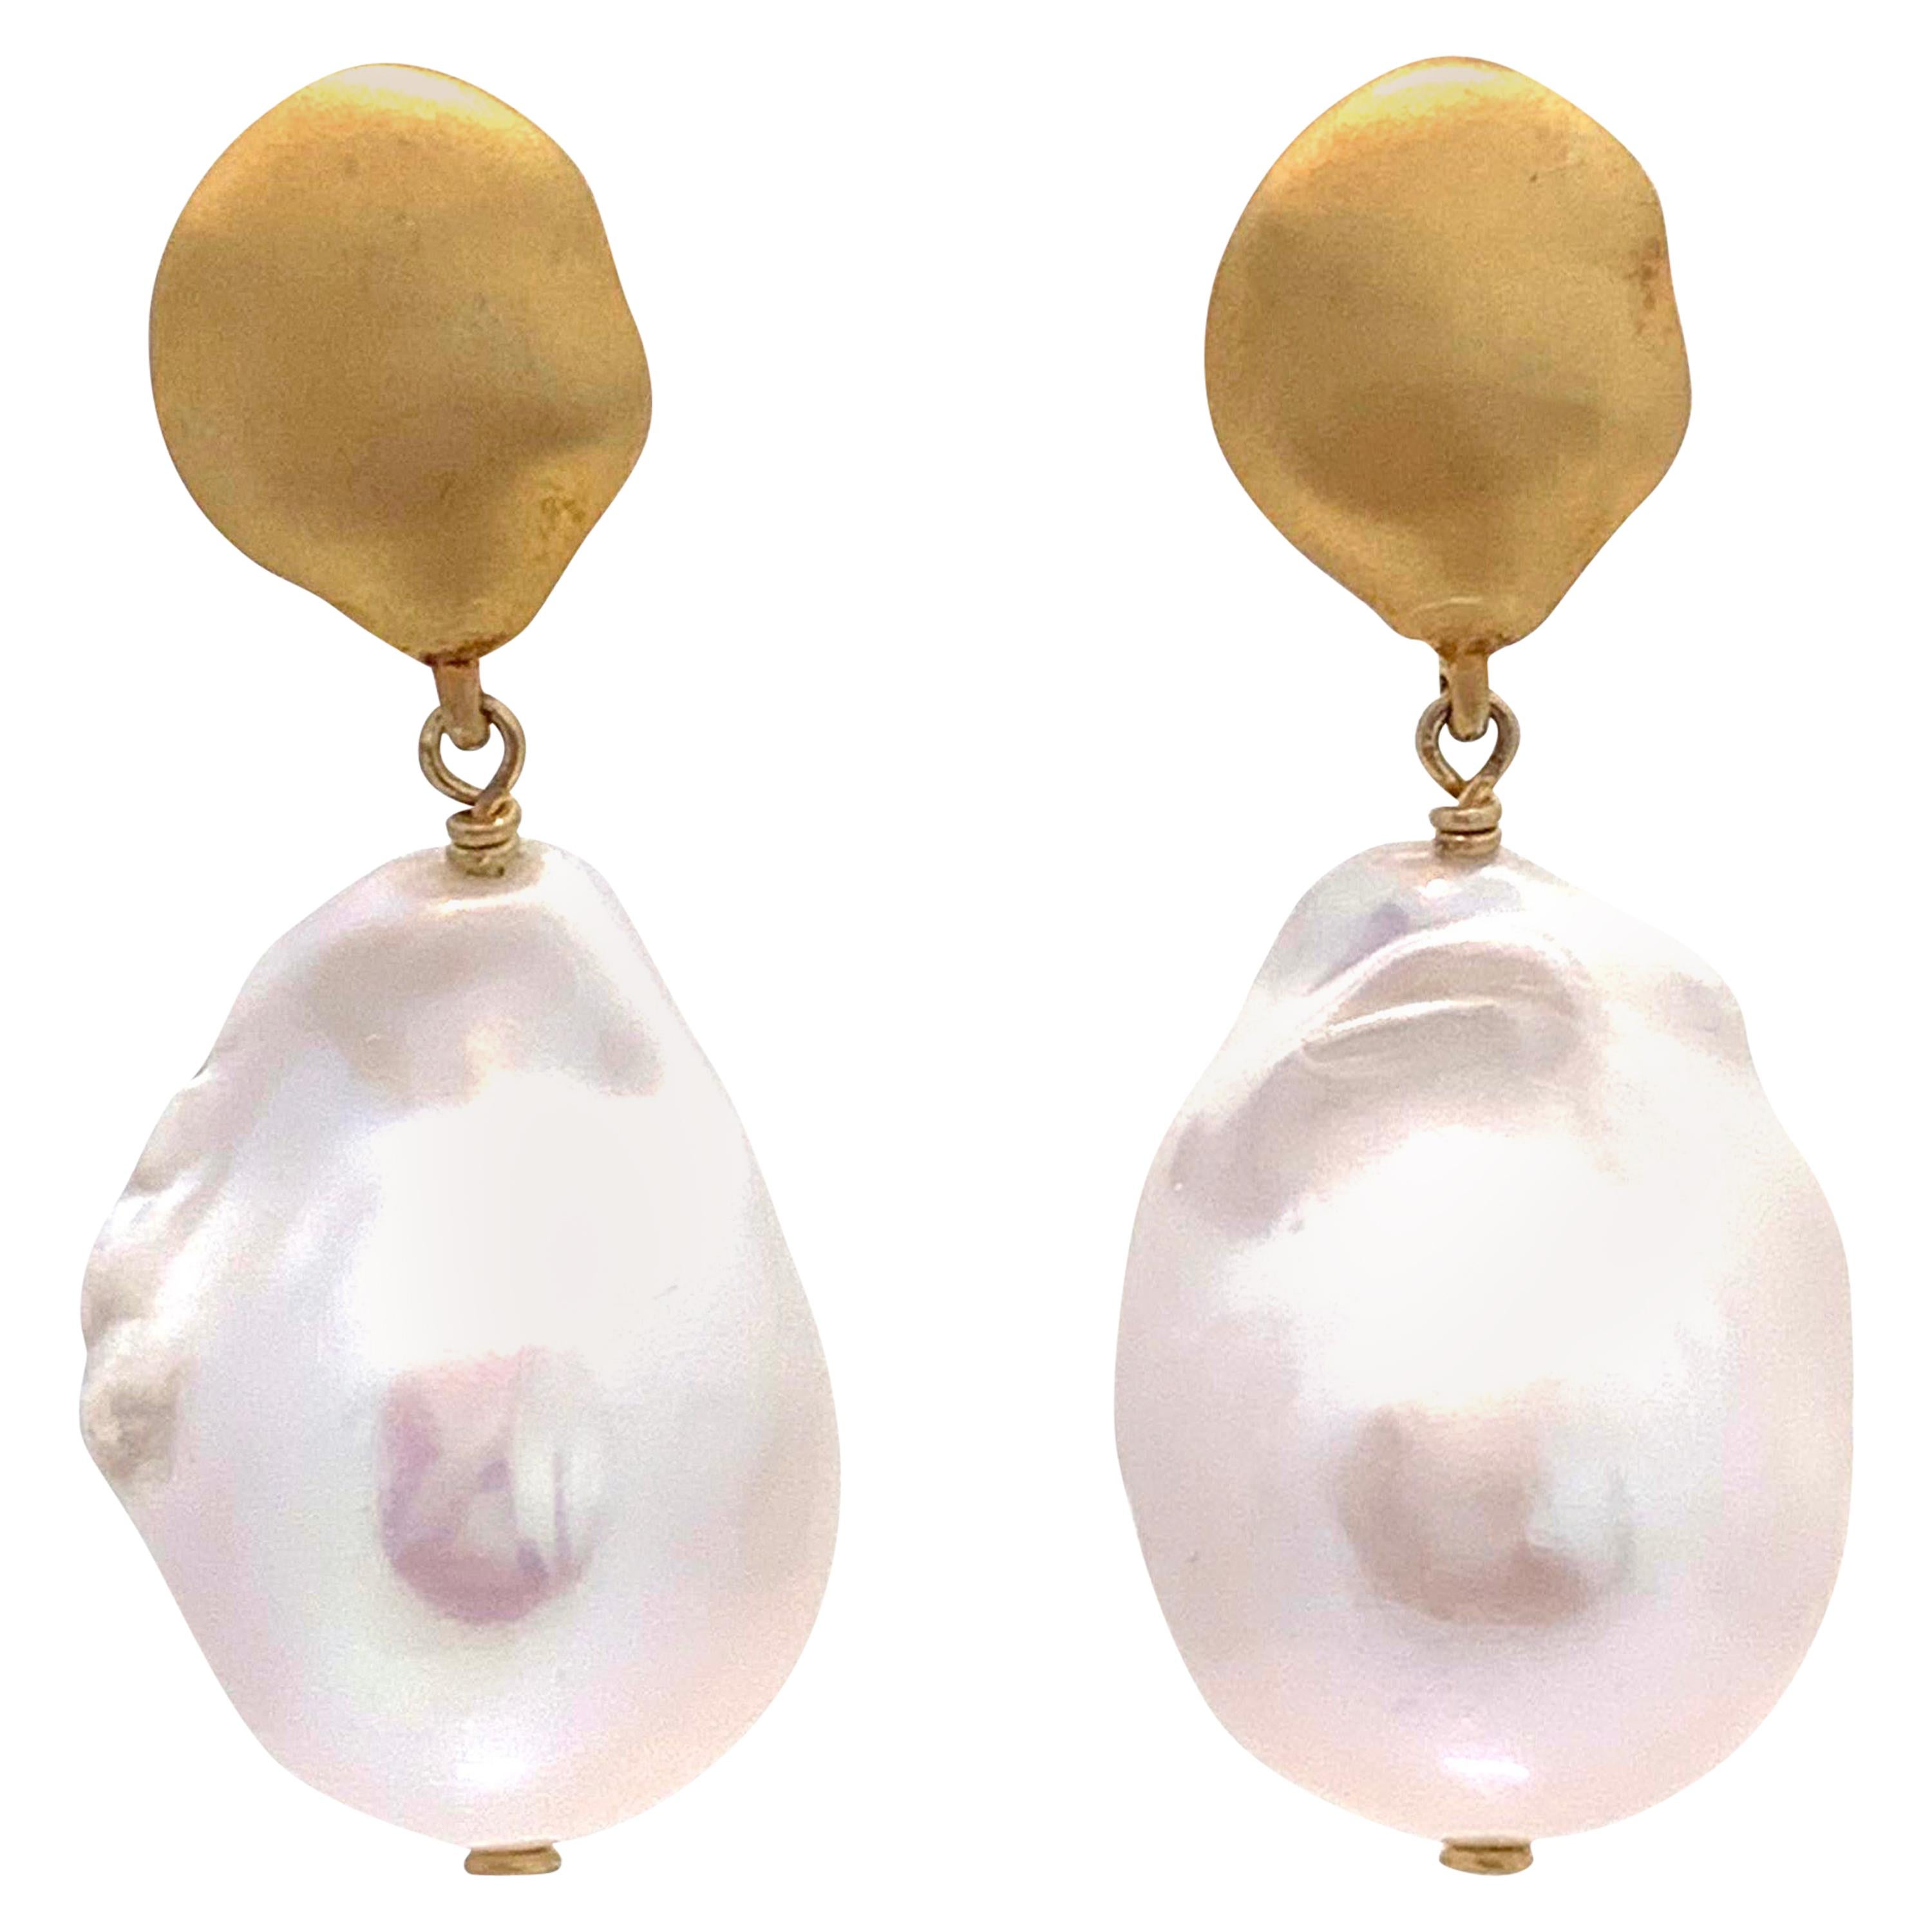 Large Lustrous pair of 18mm Cultured Baroque Pearl Drop Earrings